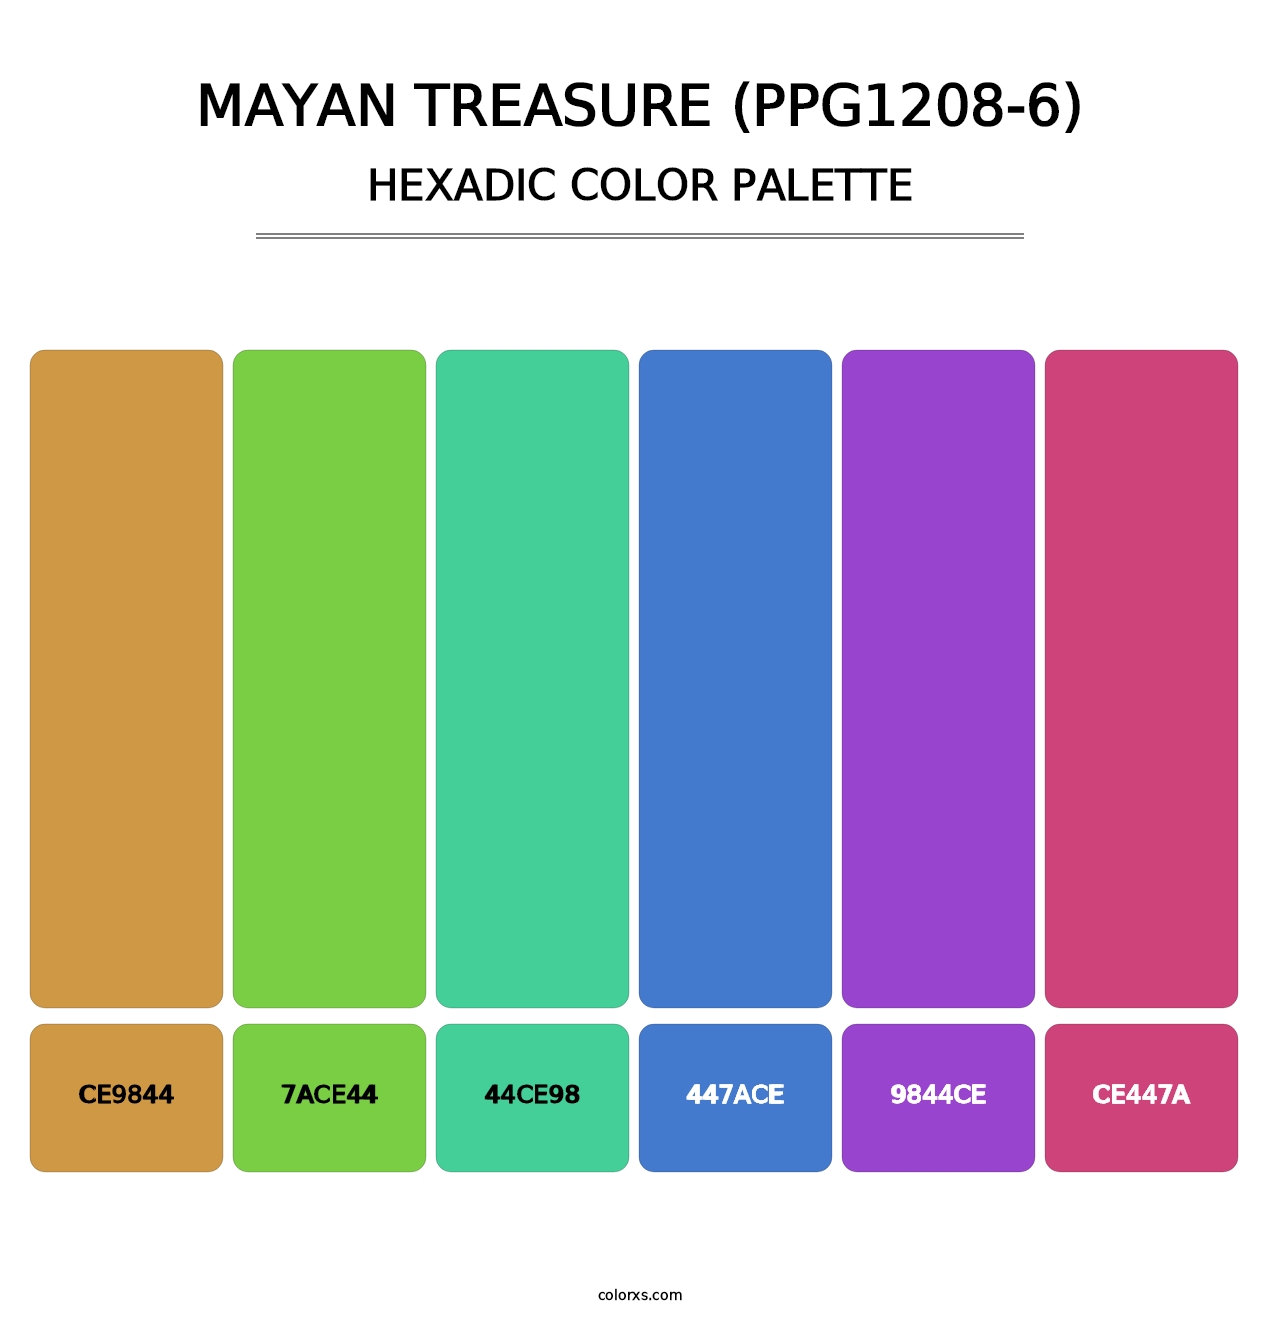 Mayan Treasure (PPG1208-6) - Hexadic Color Palette